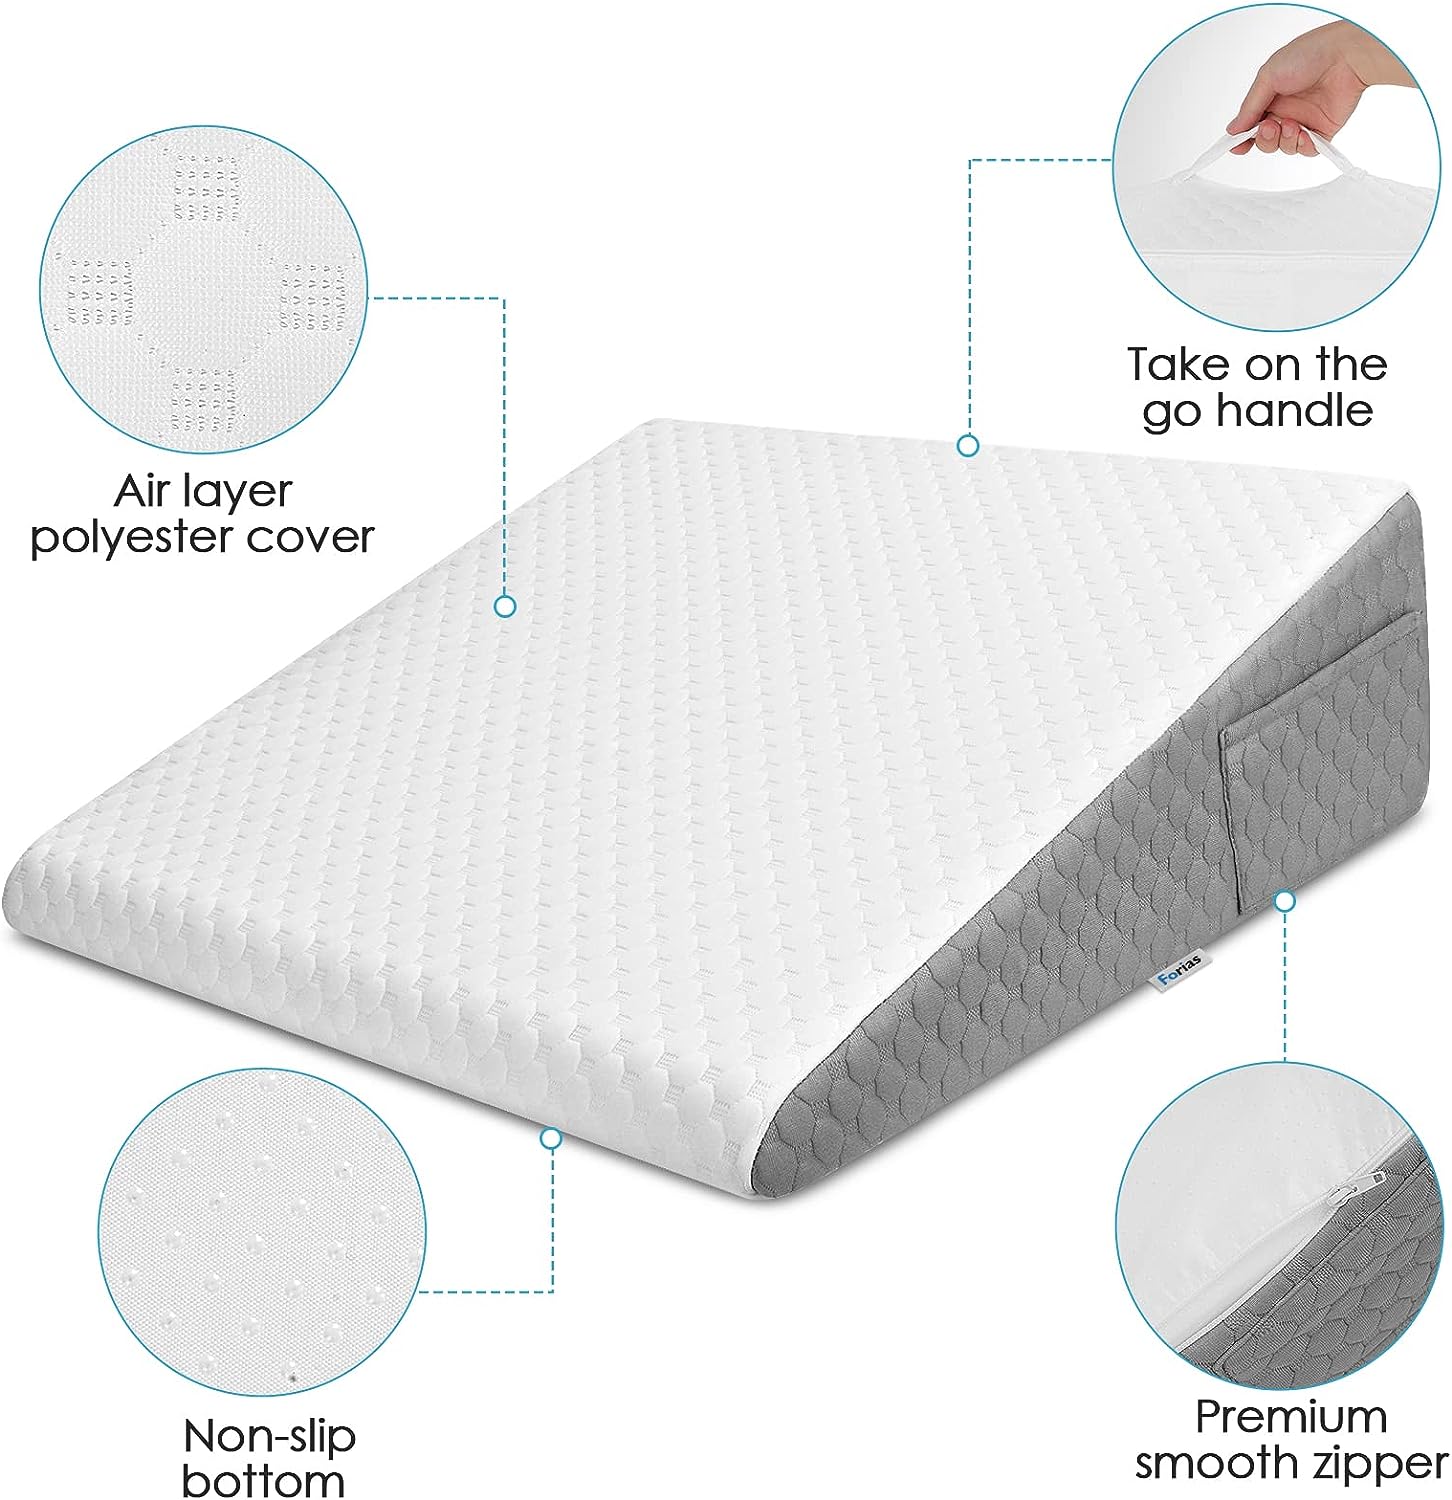 Memory foam bed pillow for sleep